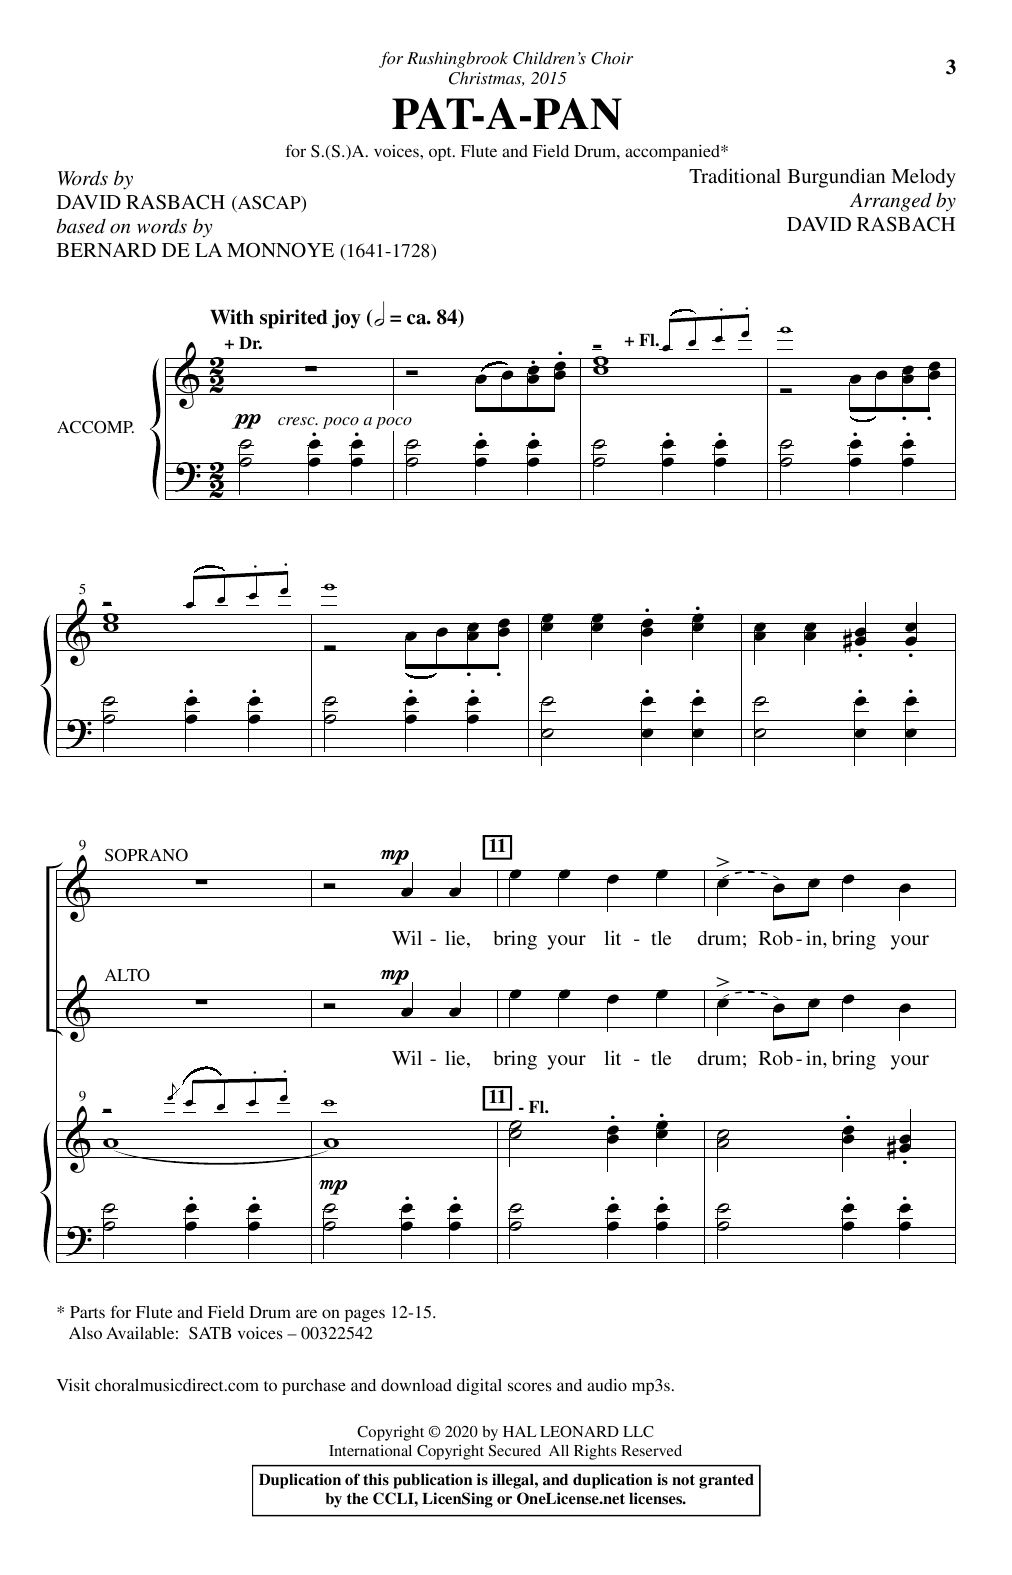 Traditional Burgundian Melody Pat-A-Pan (arr. David Rasbach) Sheet Music Notes & Chords for SSA Choir - Download or Print PDF